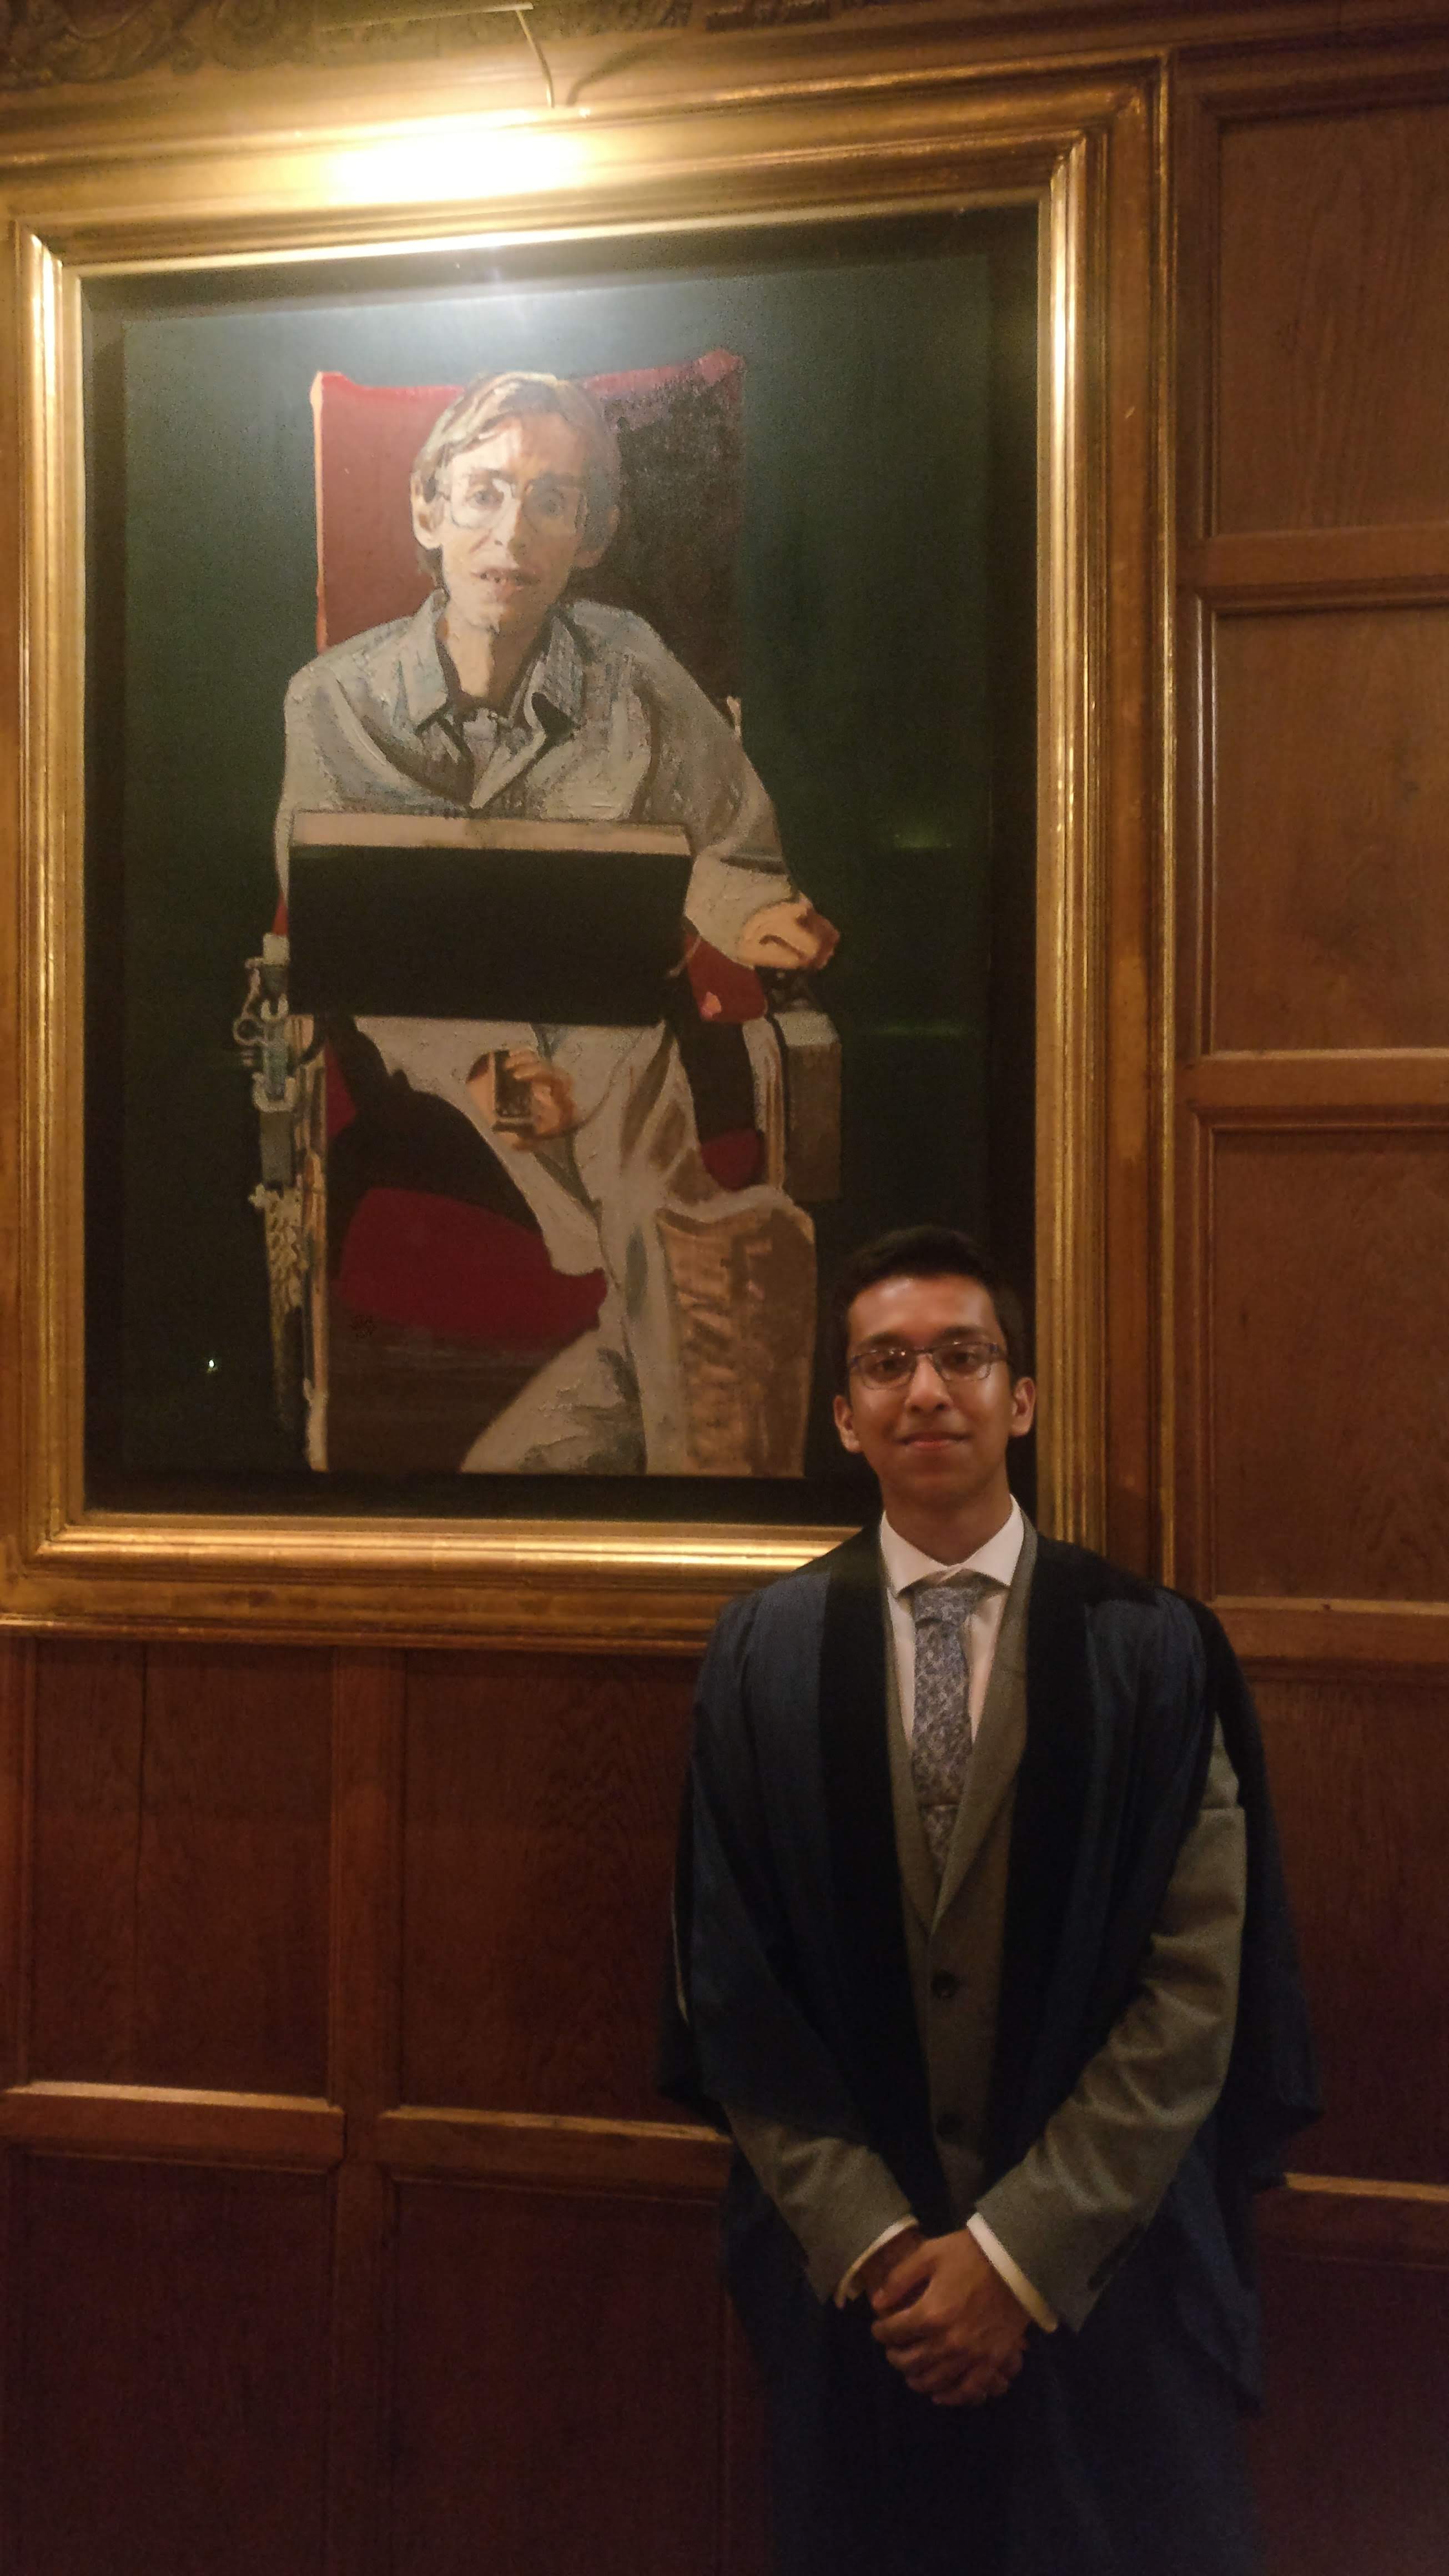 Azmaeen Zarif standing next to a portrait of Professor Stephen Hawking